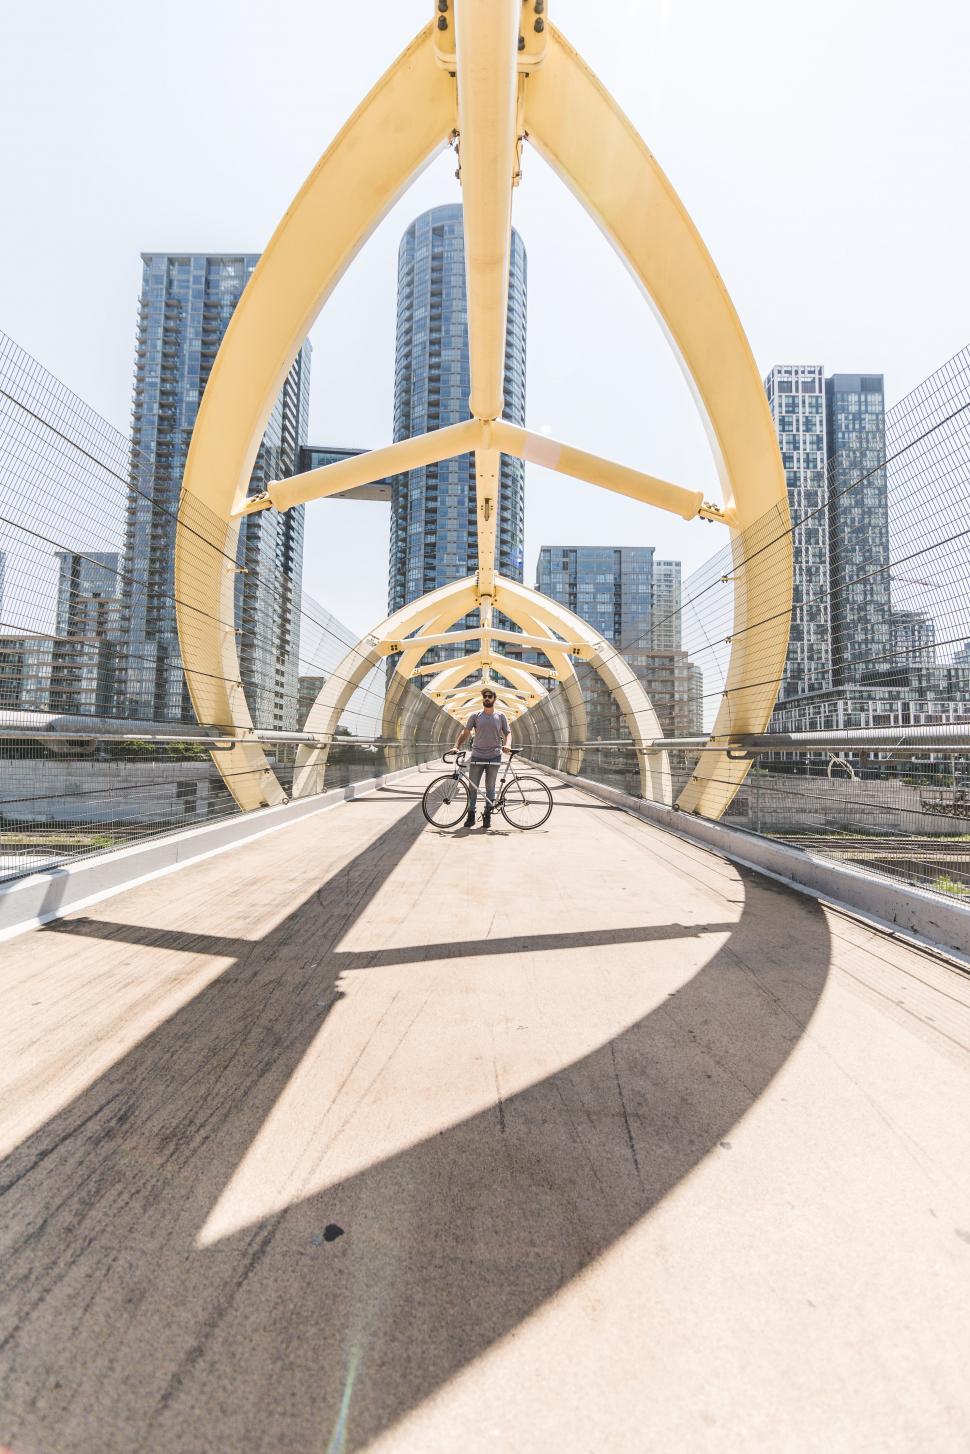 Free Image of Modern bridge in city 